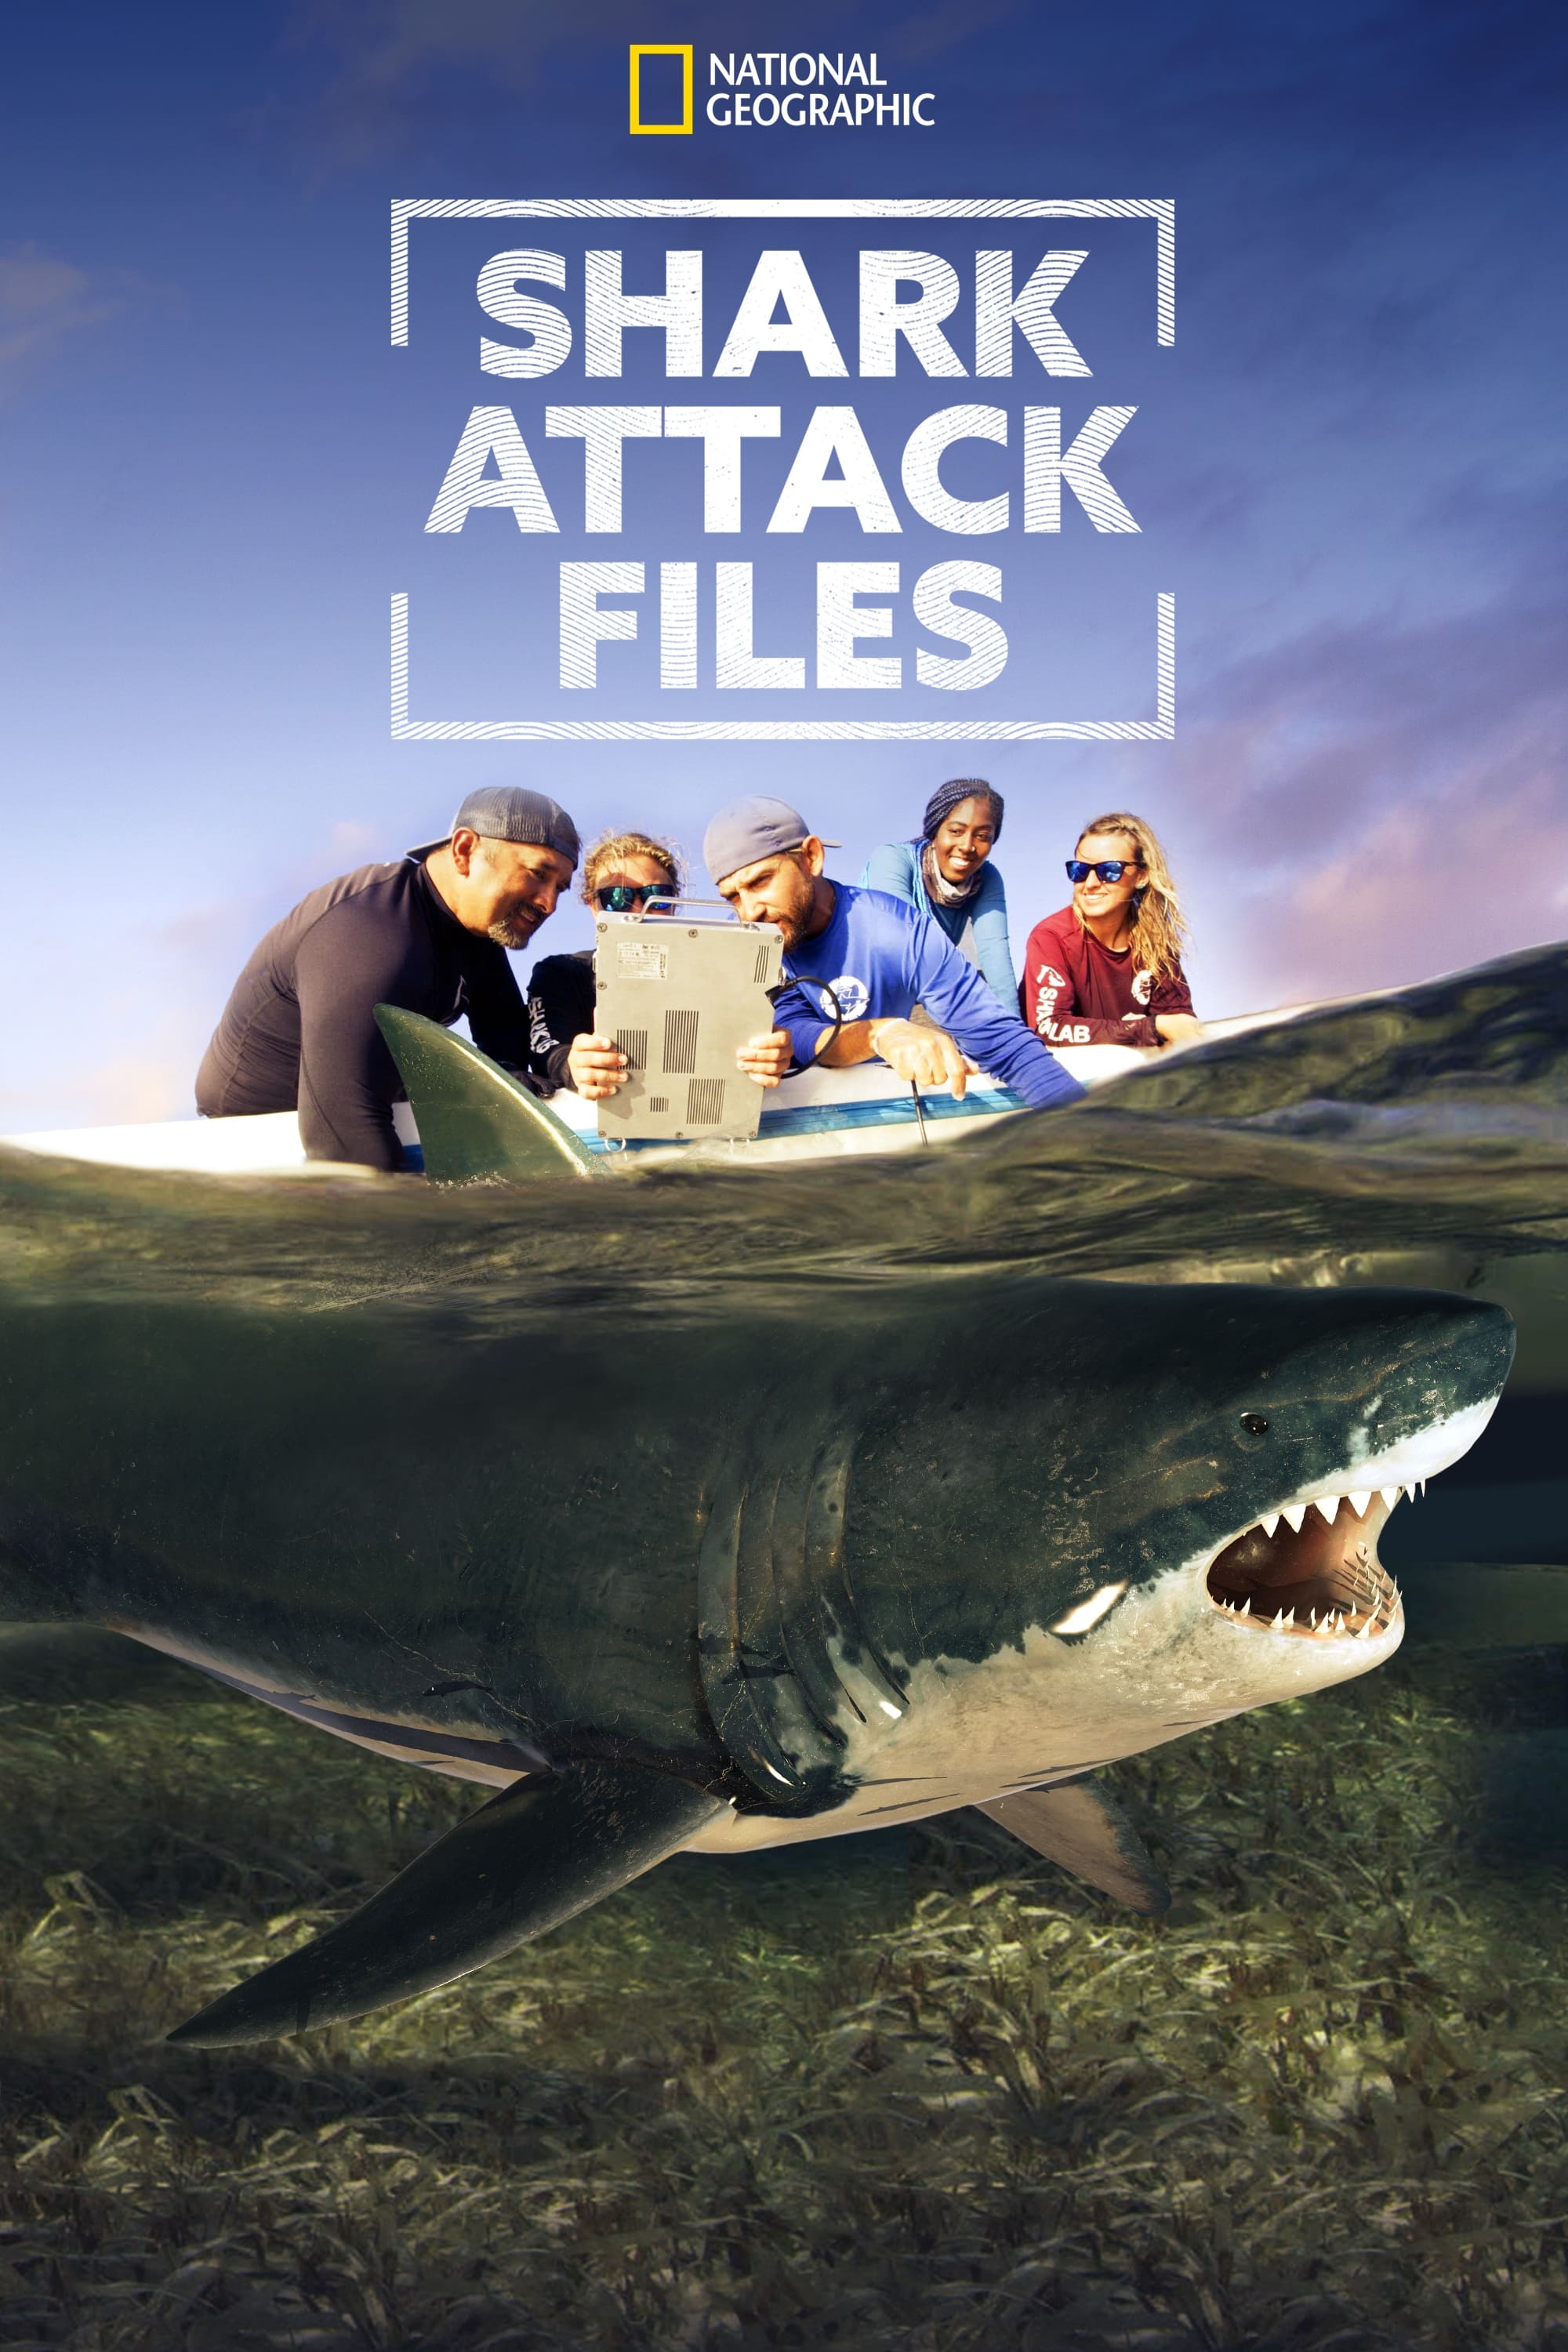 Caratula de Shark Attack Files (Ataques de tiburones - acceso exclusivo) 